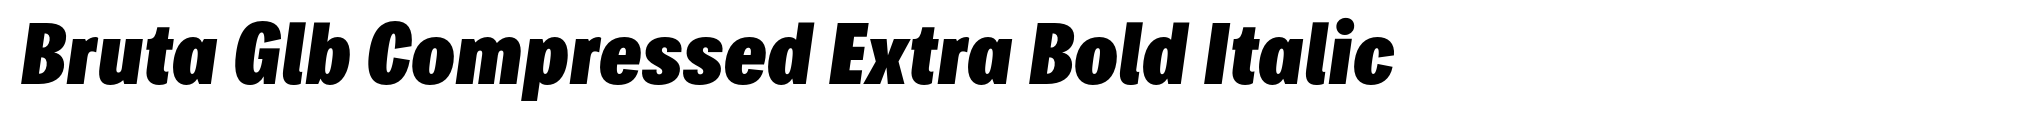 Bruta Glb Compressed Extra Bold Italic image